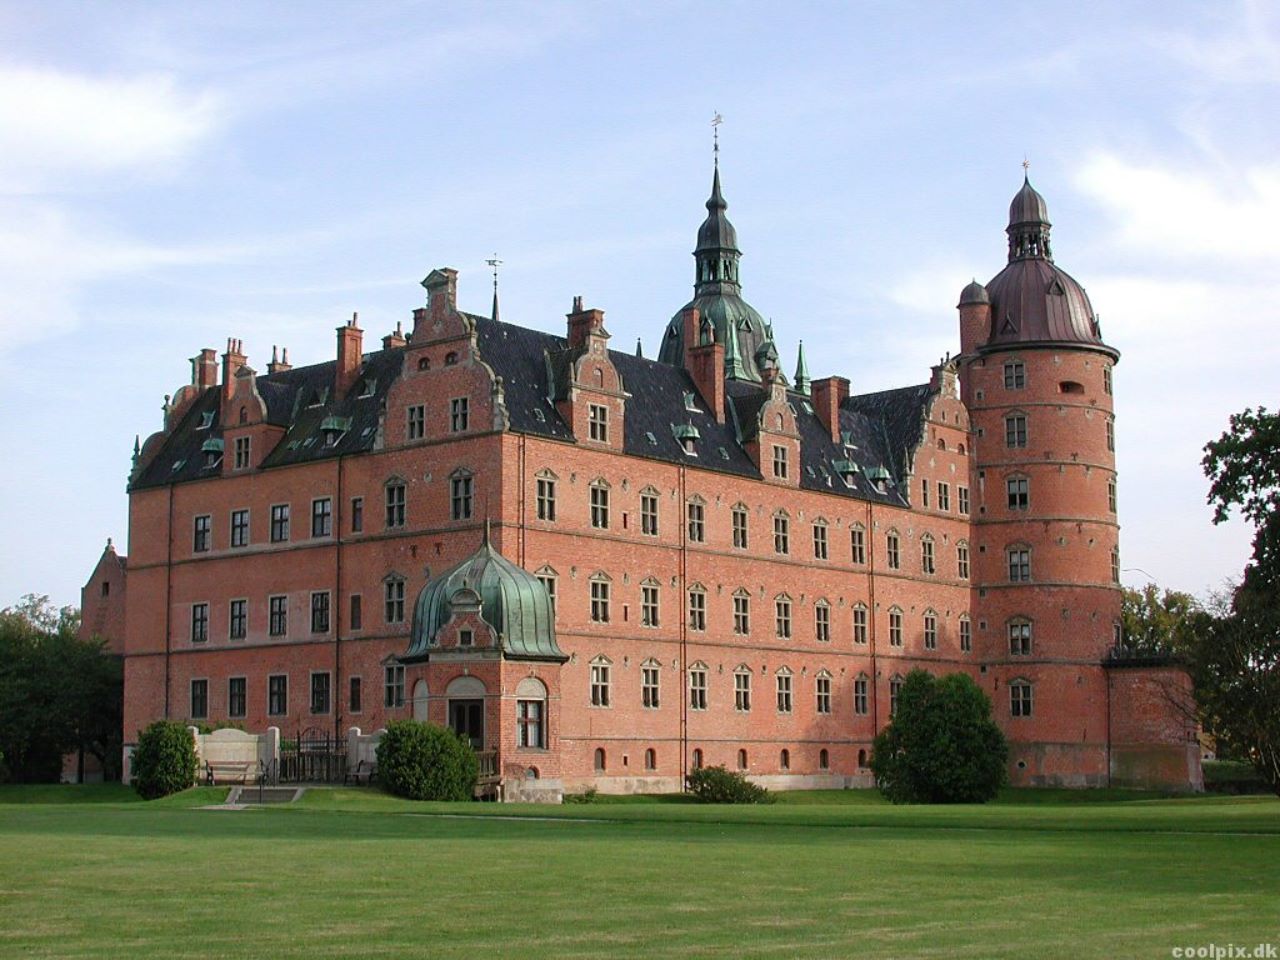 Vallø Slot